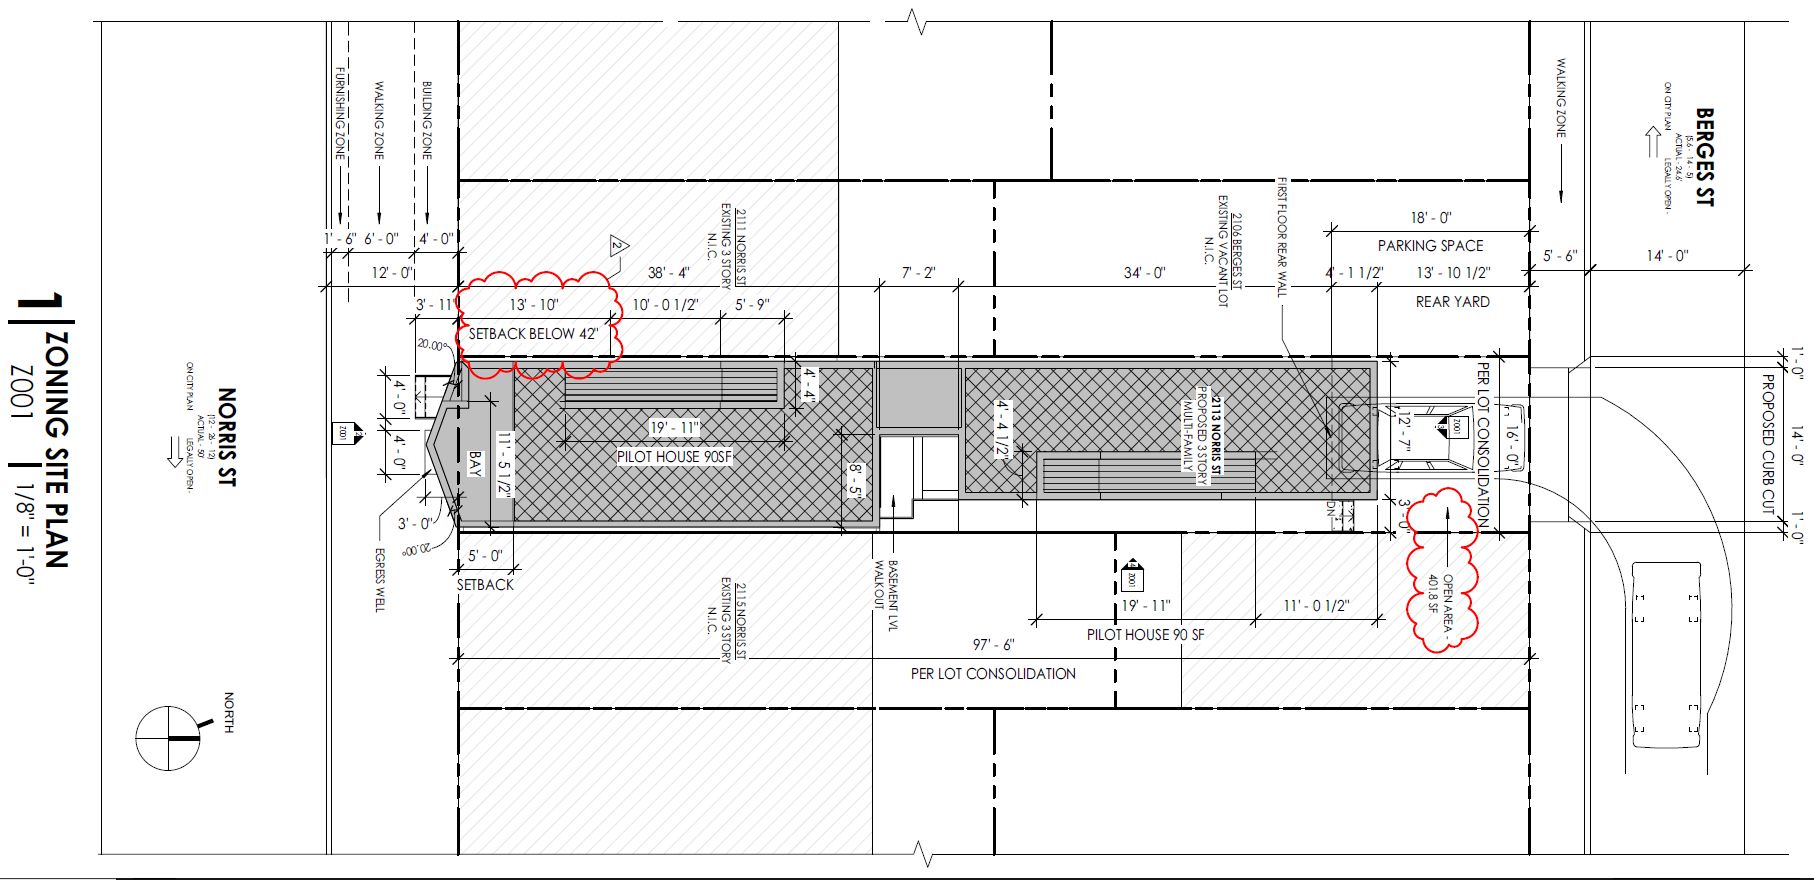 2113 East Norris Street. Site plan. Credit: Designblendz via the City of Philadelphia